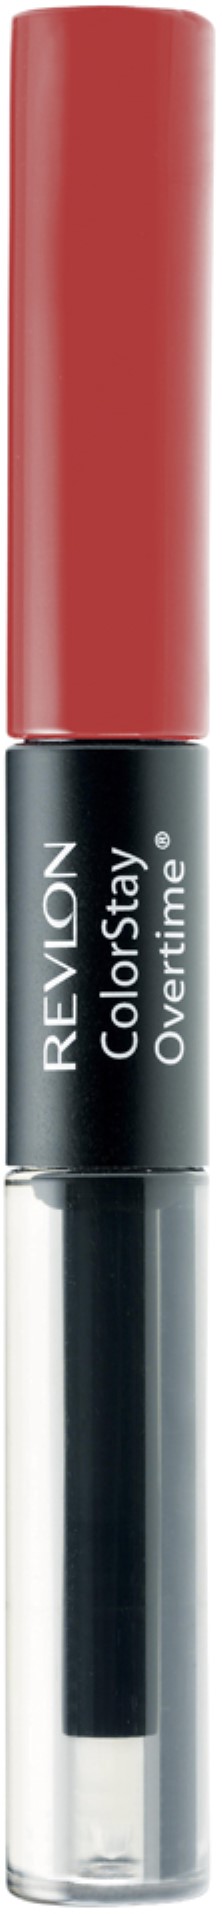 Revlon ColorStay Overtime Liquid Lip Color, Infinite Raspberry [005] 0.07 oz (Pack of 6) - image 1 of 1